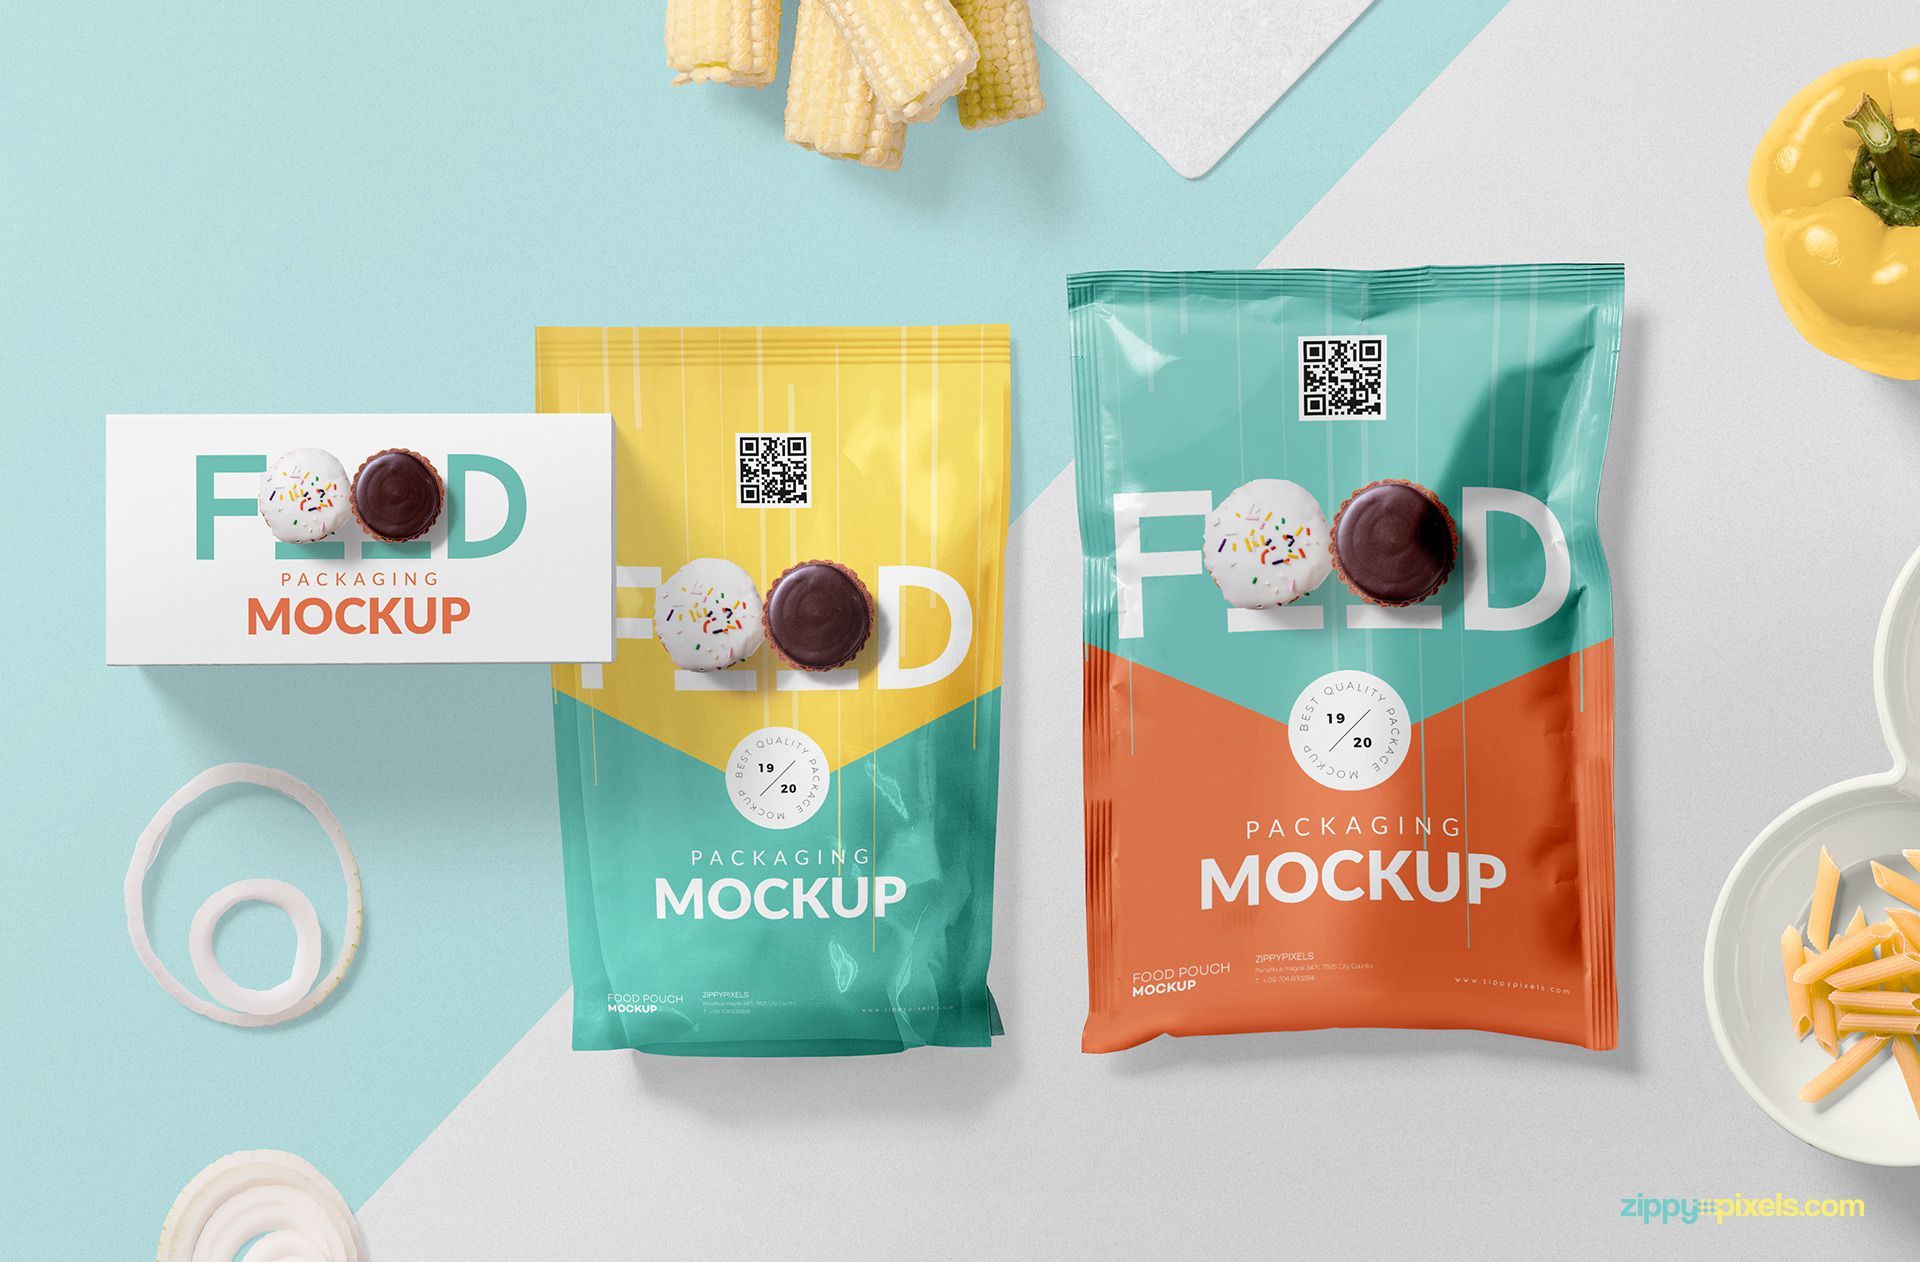 Free food packaging mockup PSD. #free #freebie #mockup #psd #photoshop